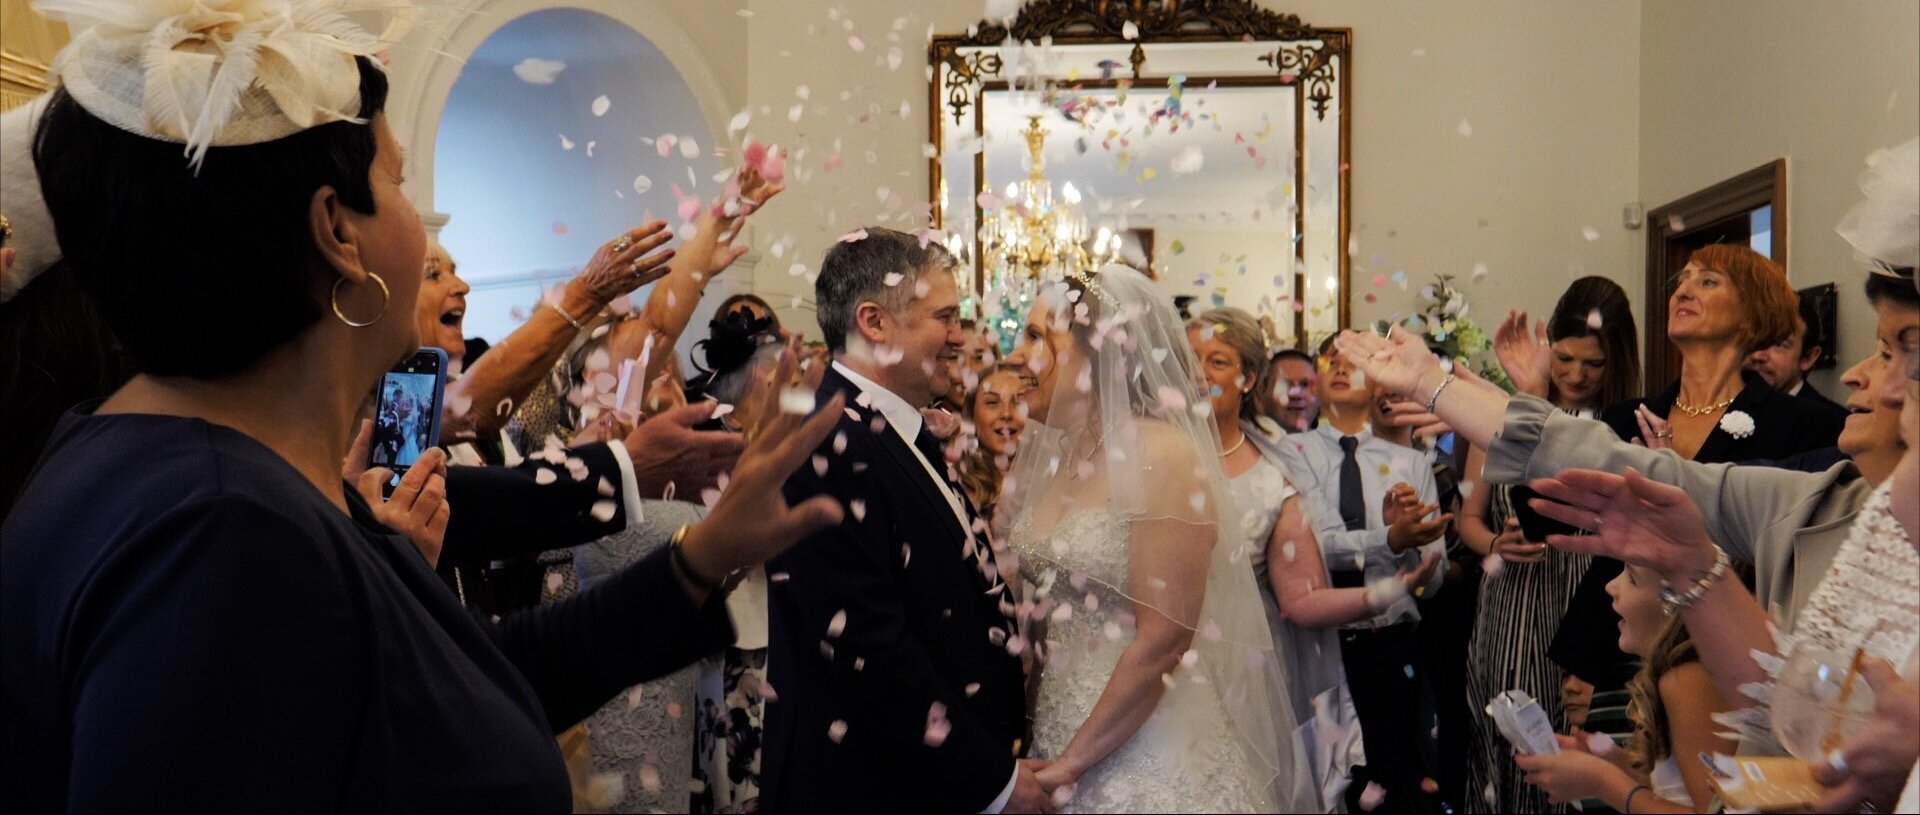 Confetti video Essex weddings.jpg